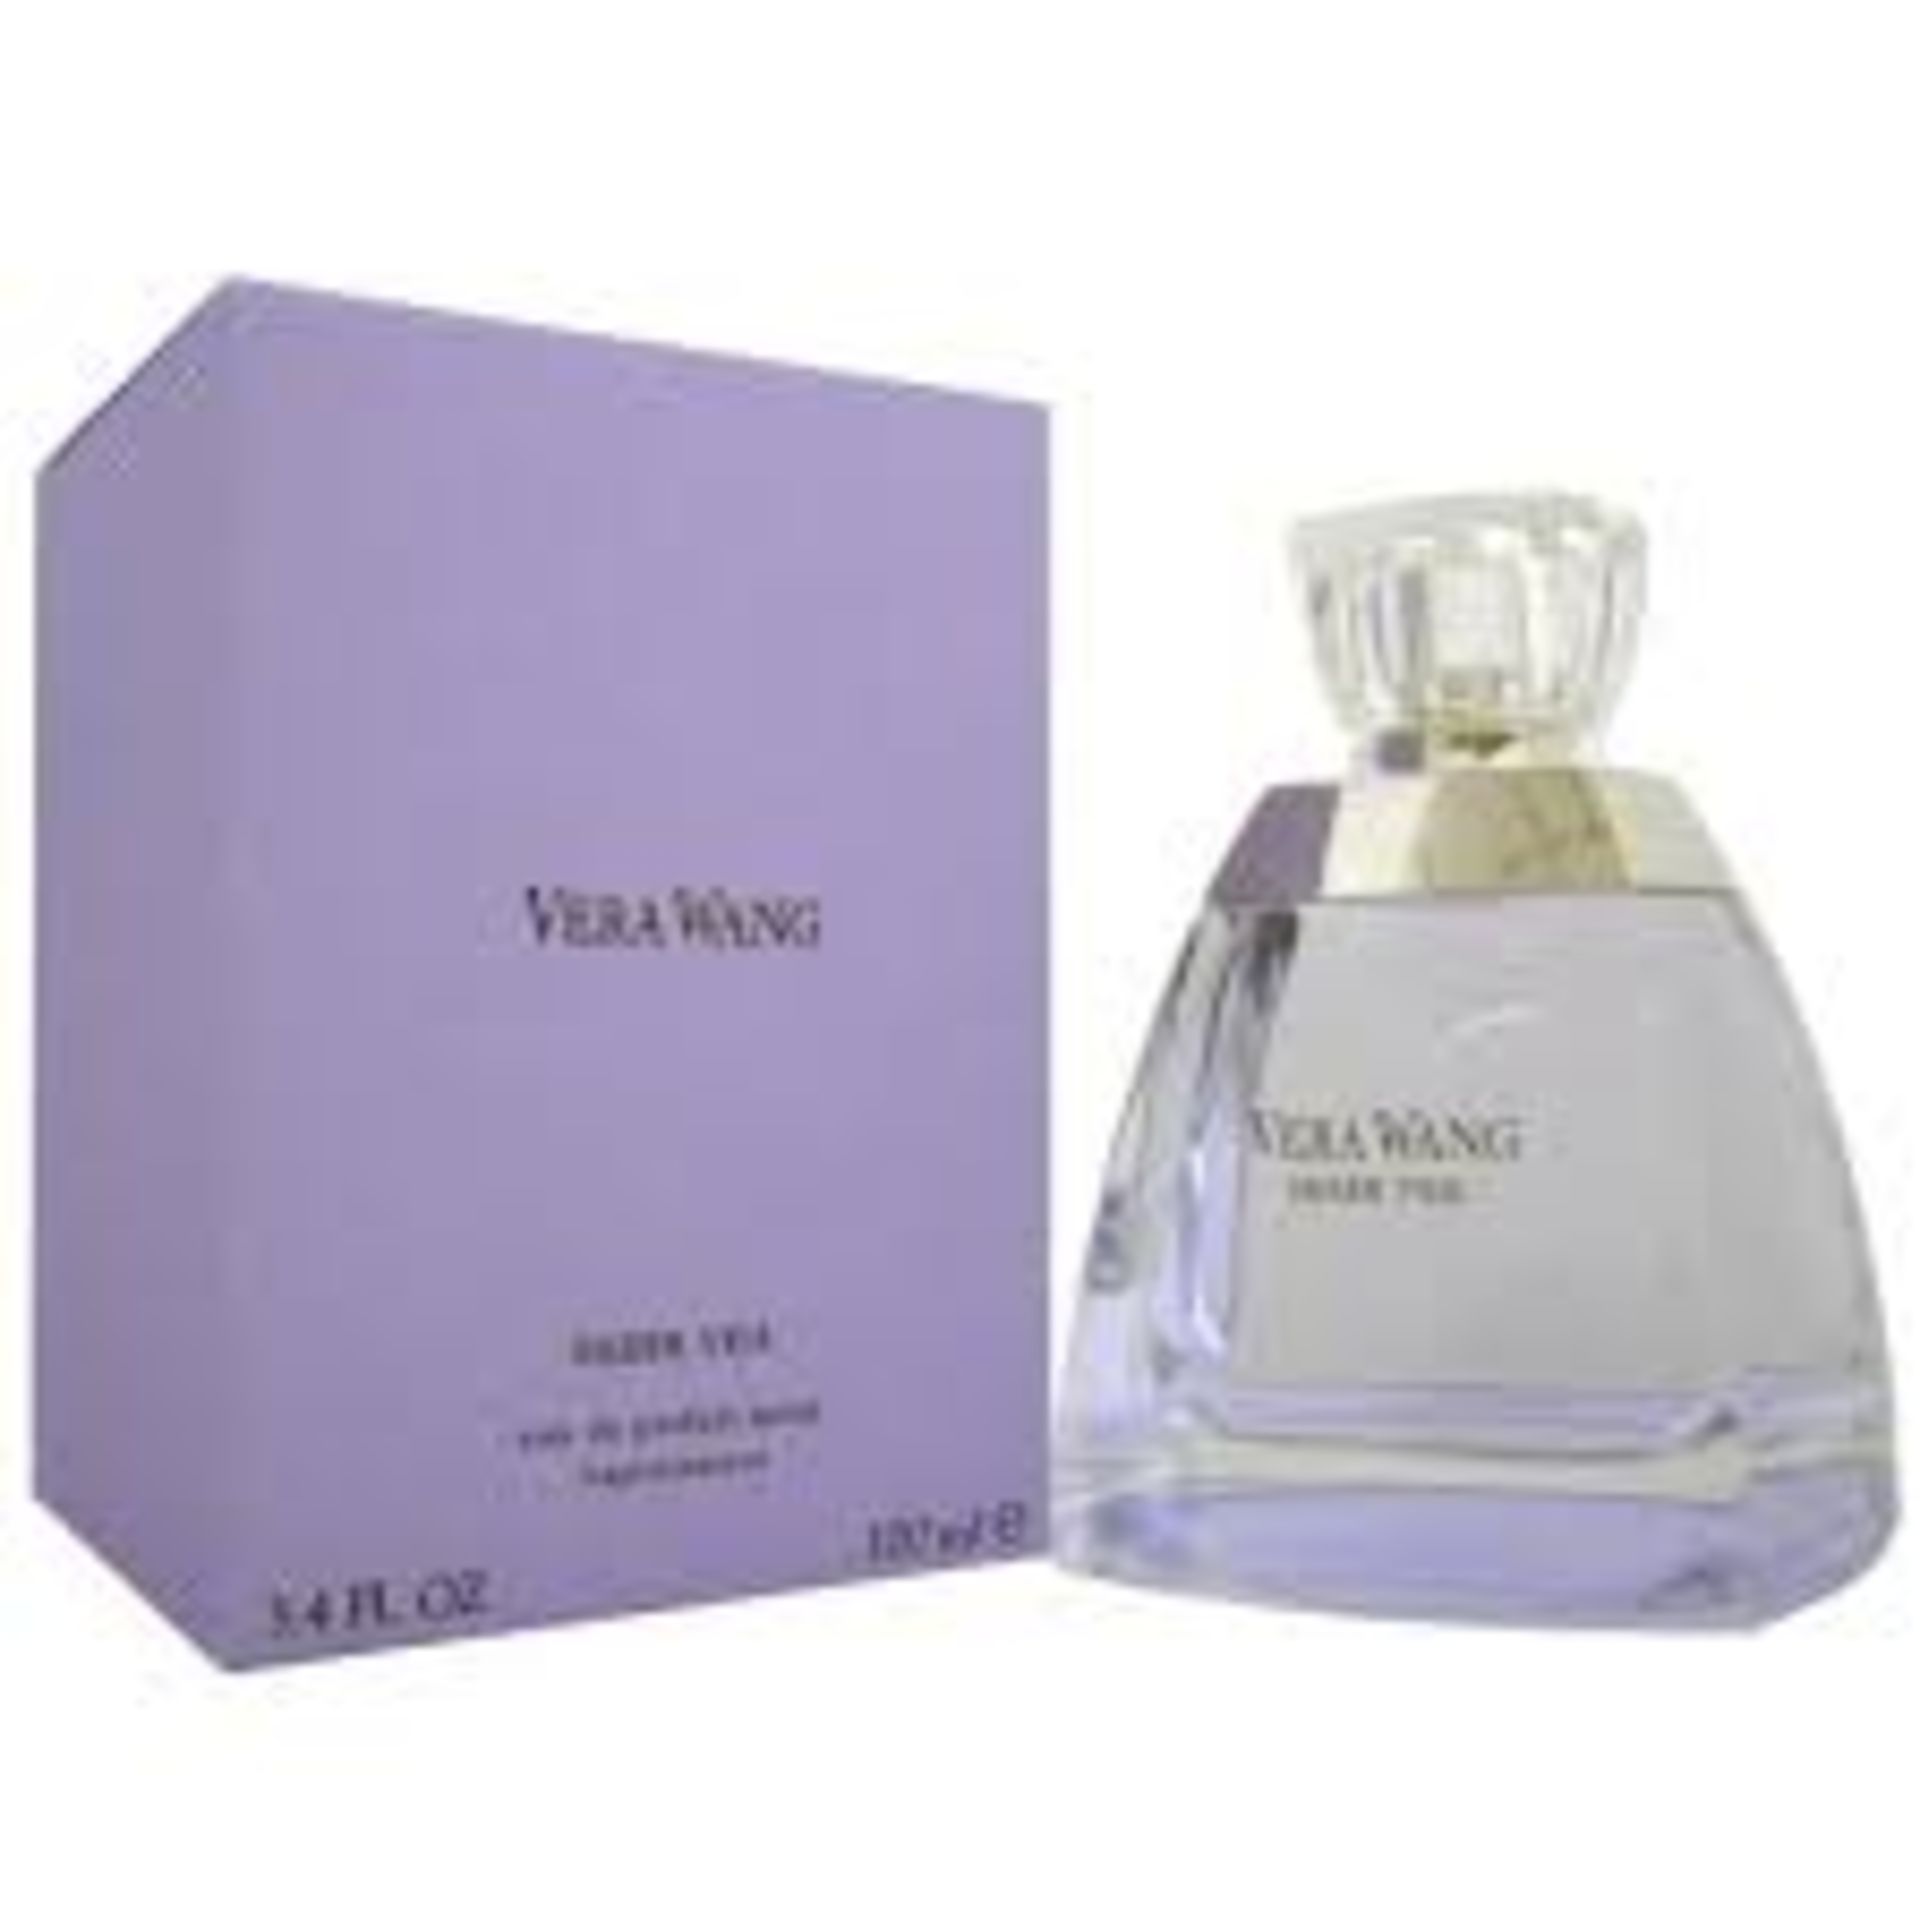 V Brand New Vera Wang Sheer Veil 100 ml EDP spray - Half Price Perfumes £25.99